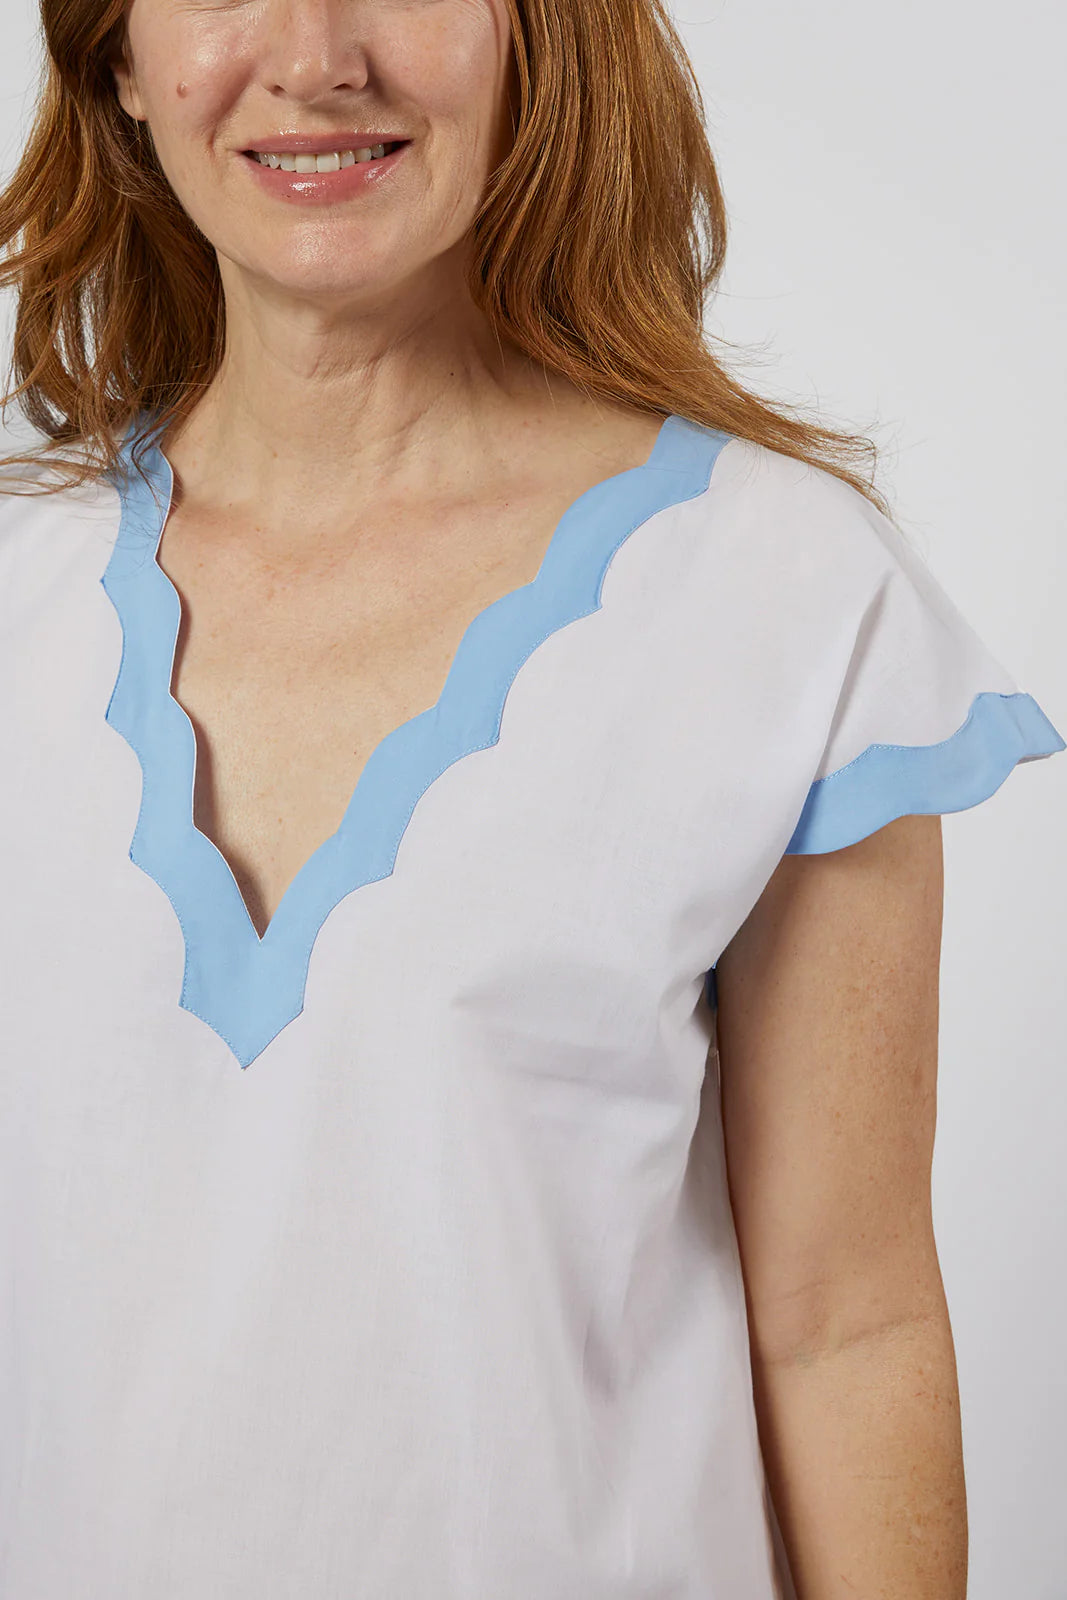 Myriam Long Sheer Nightgown - sizes 4-14